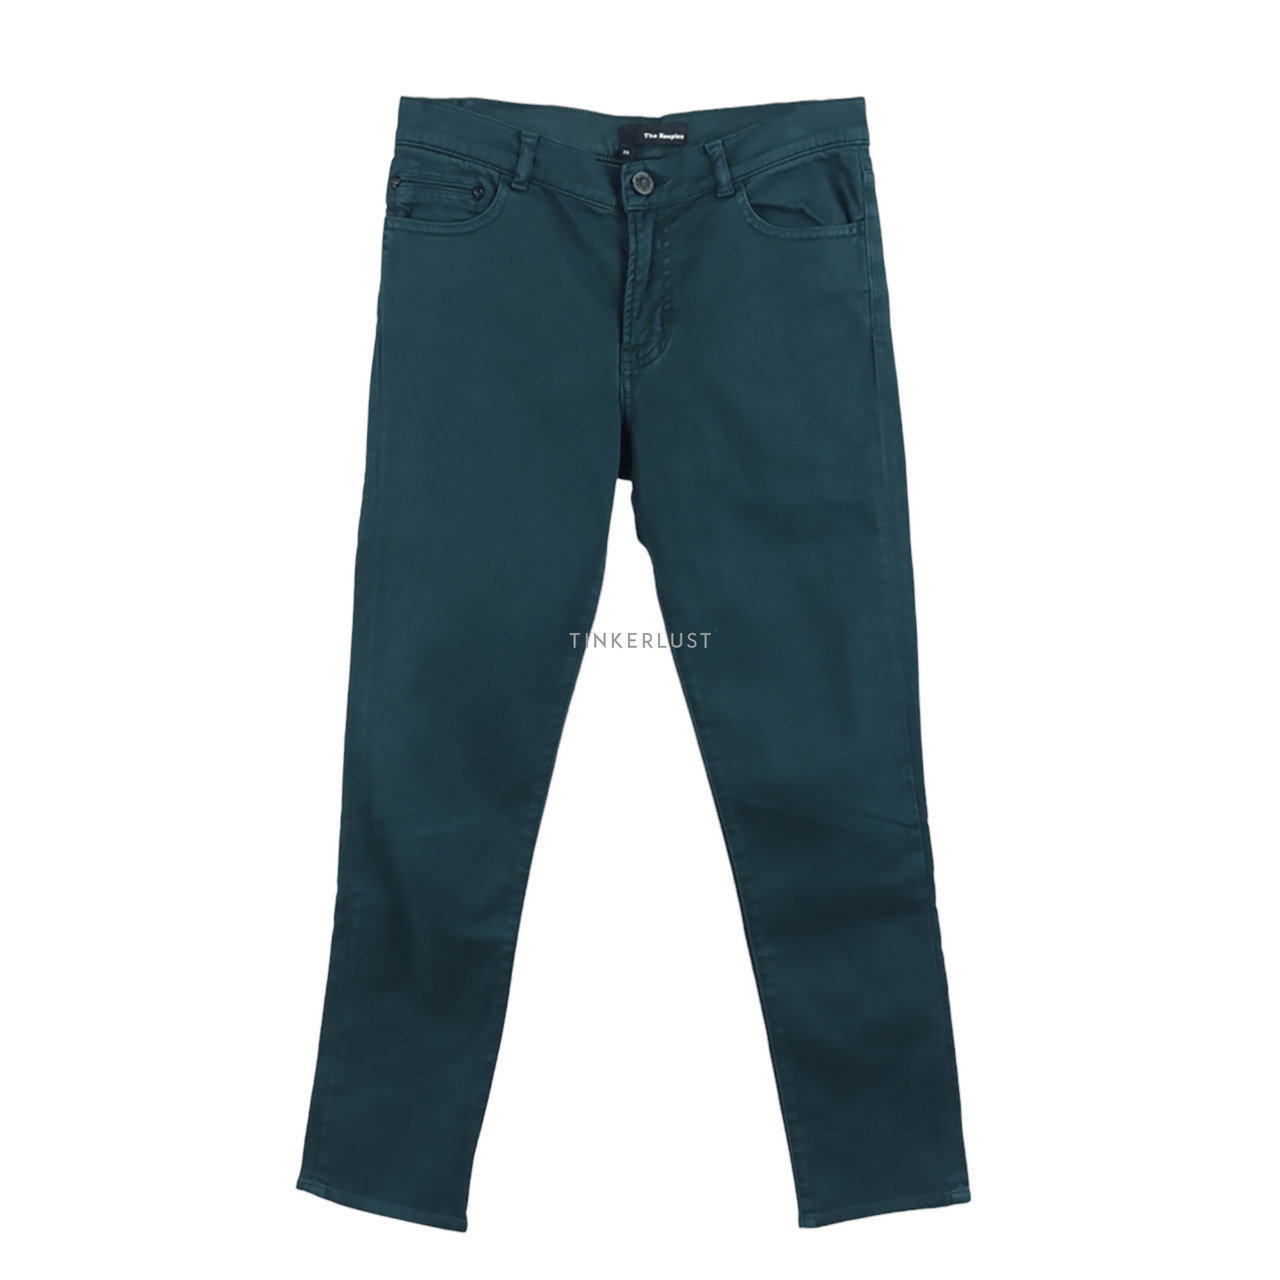 The Kooples Dark Green Jeans Long Pants